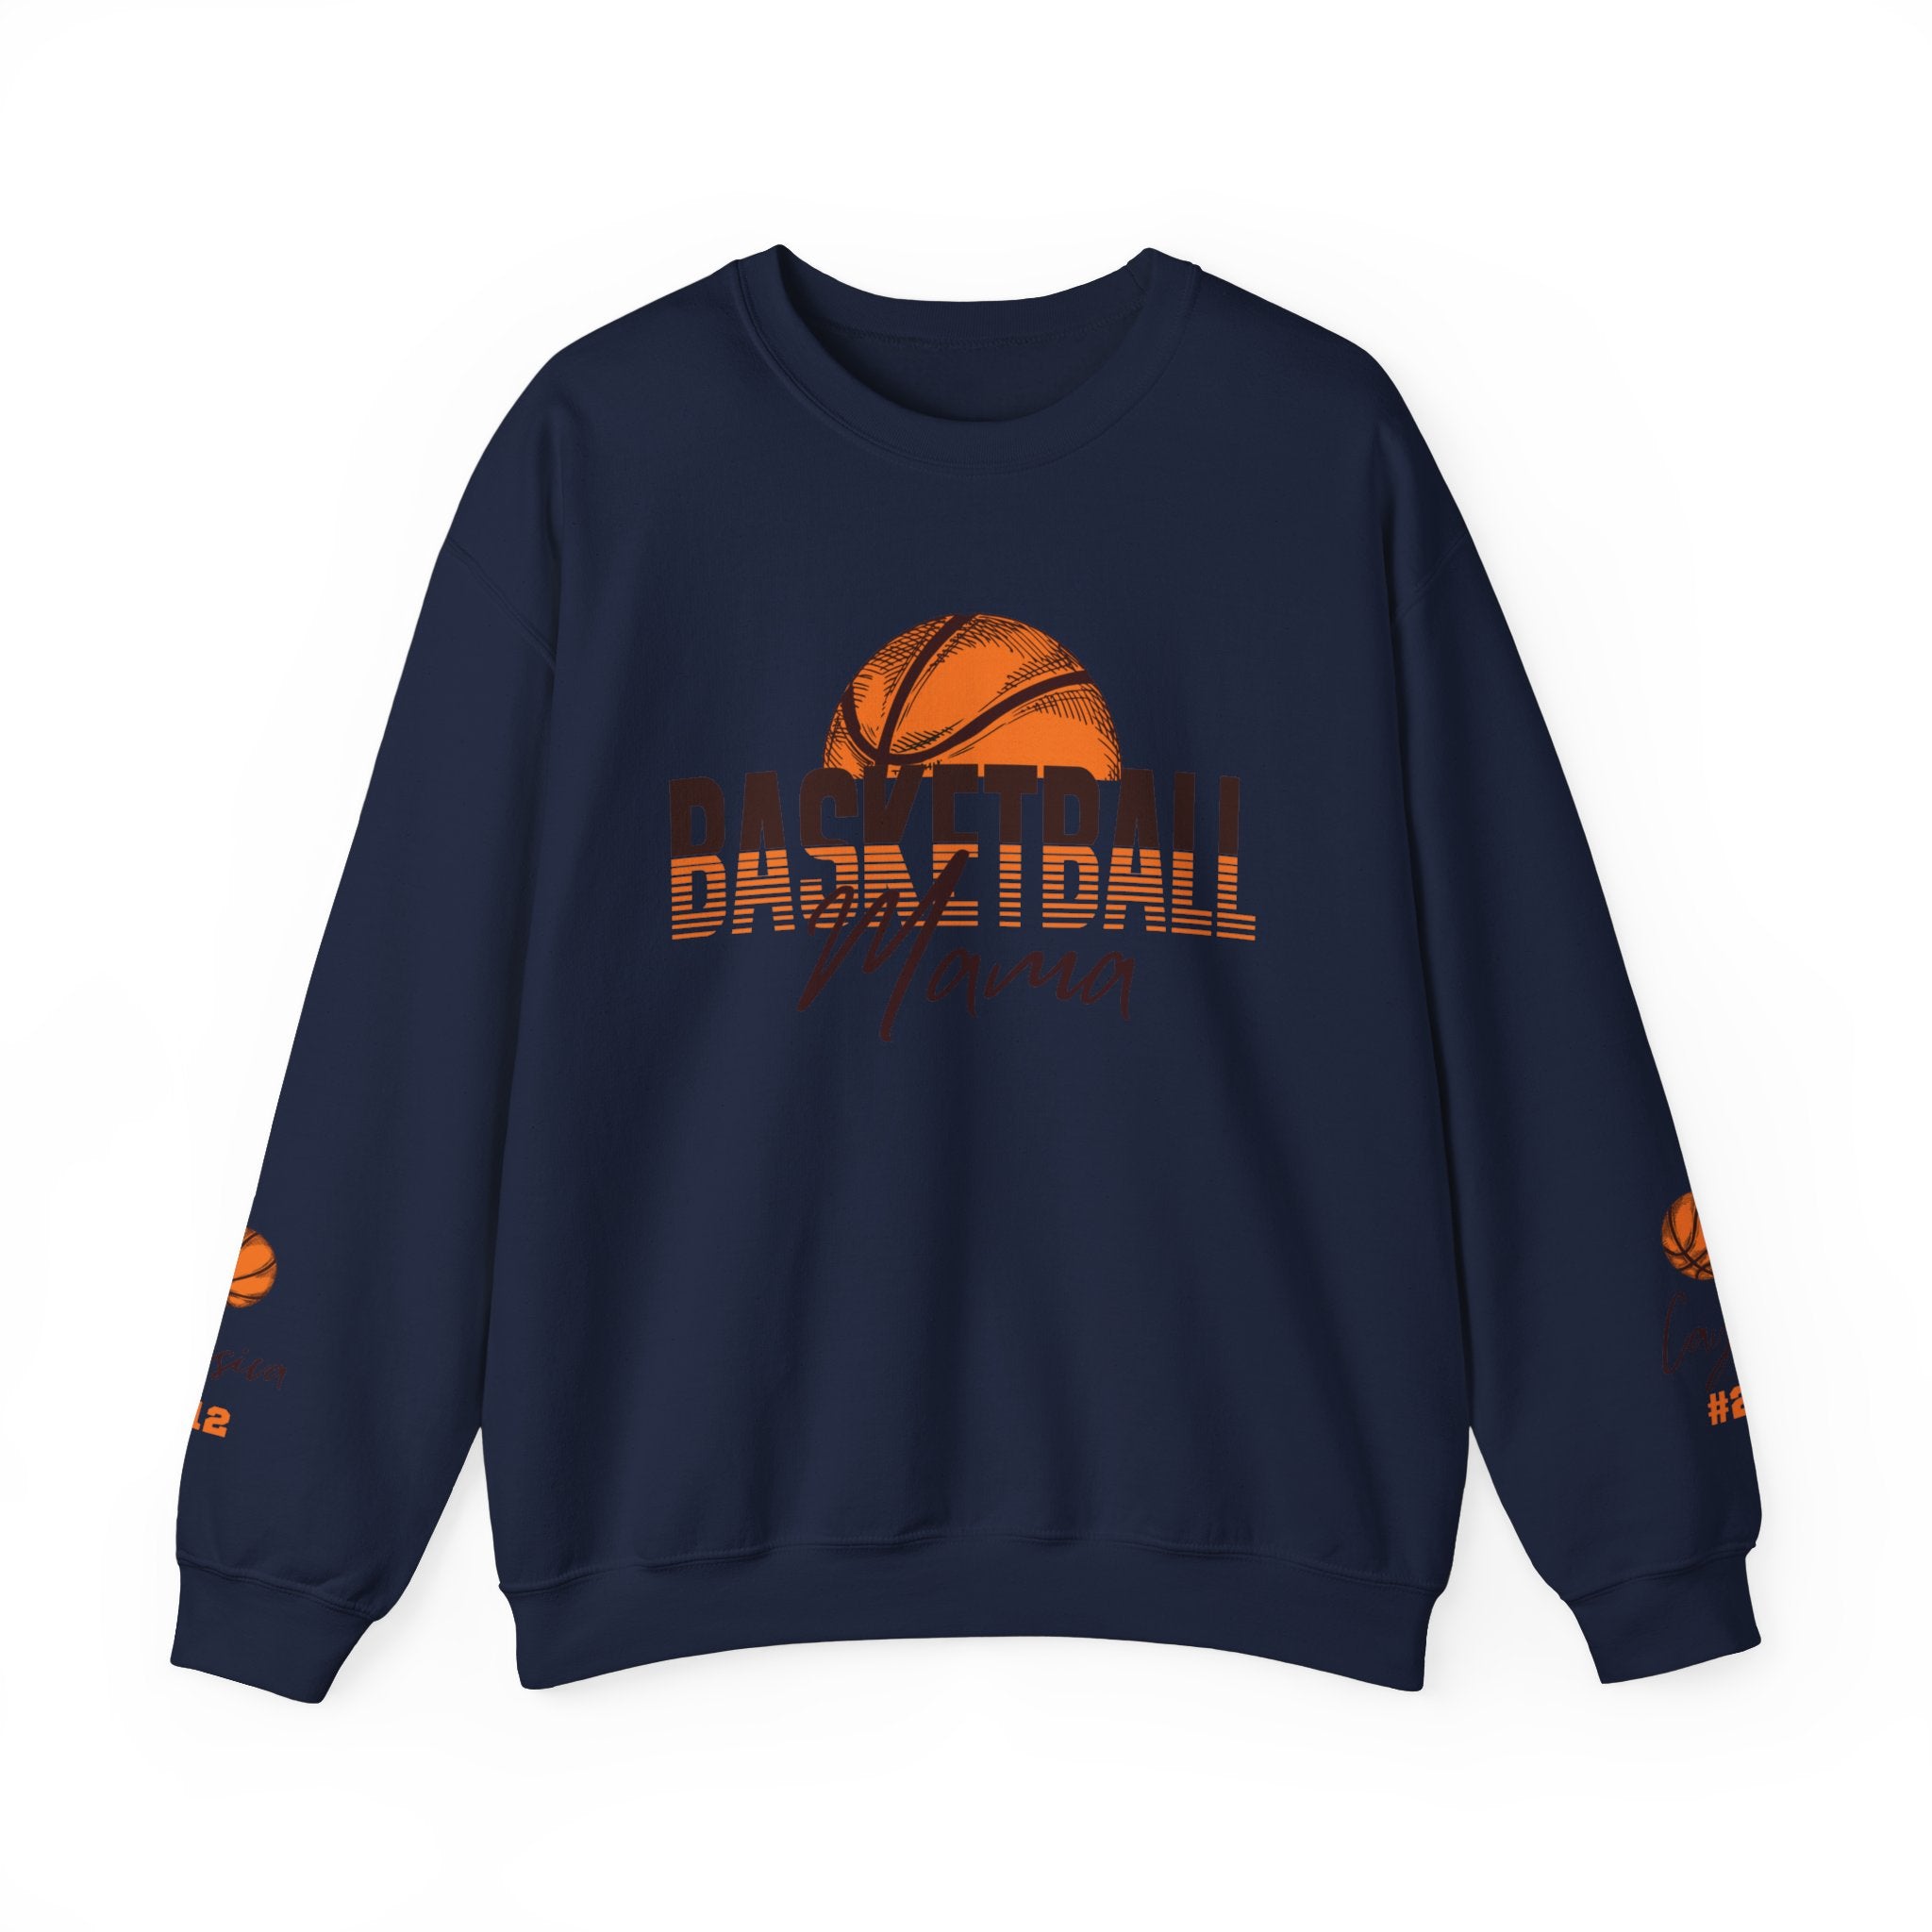 Basketball Mama Sweatshirt with Personalized Sleeves